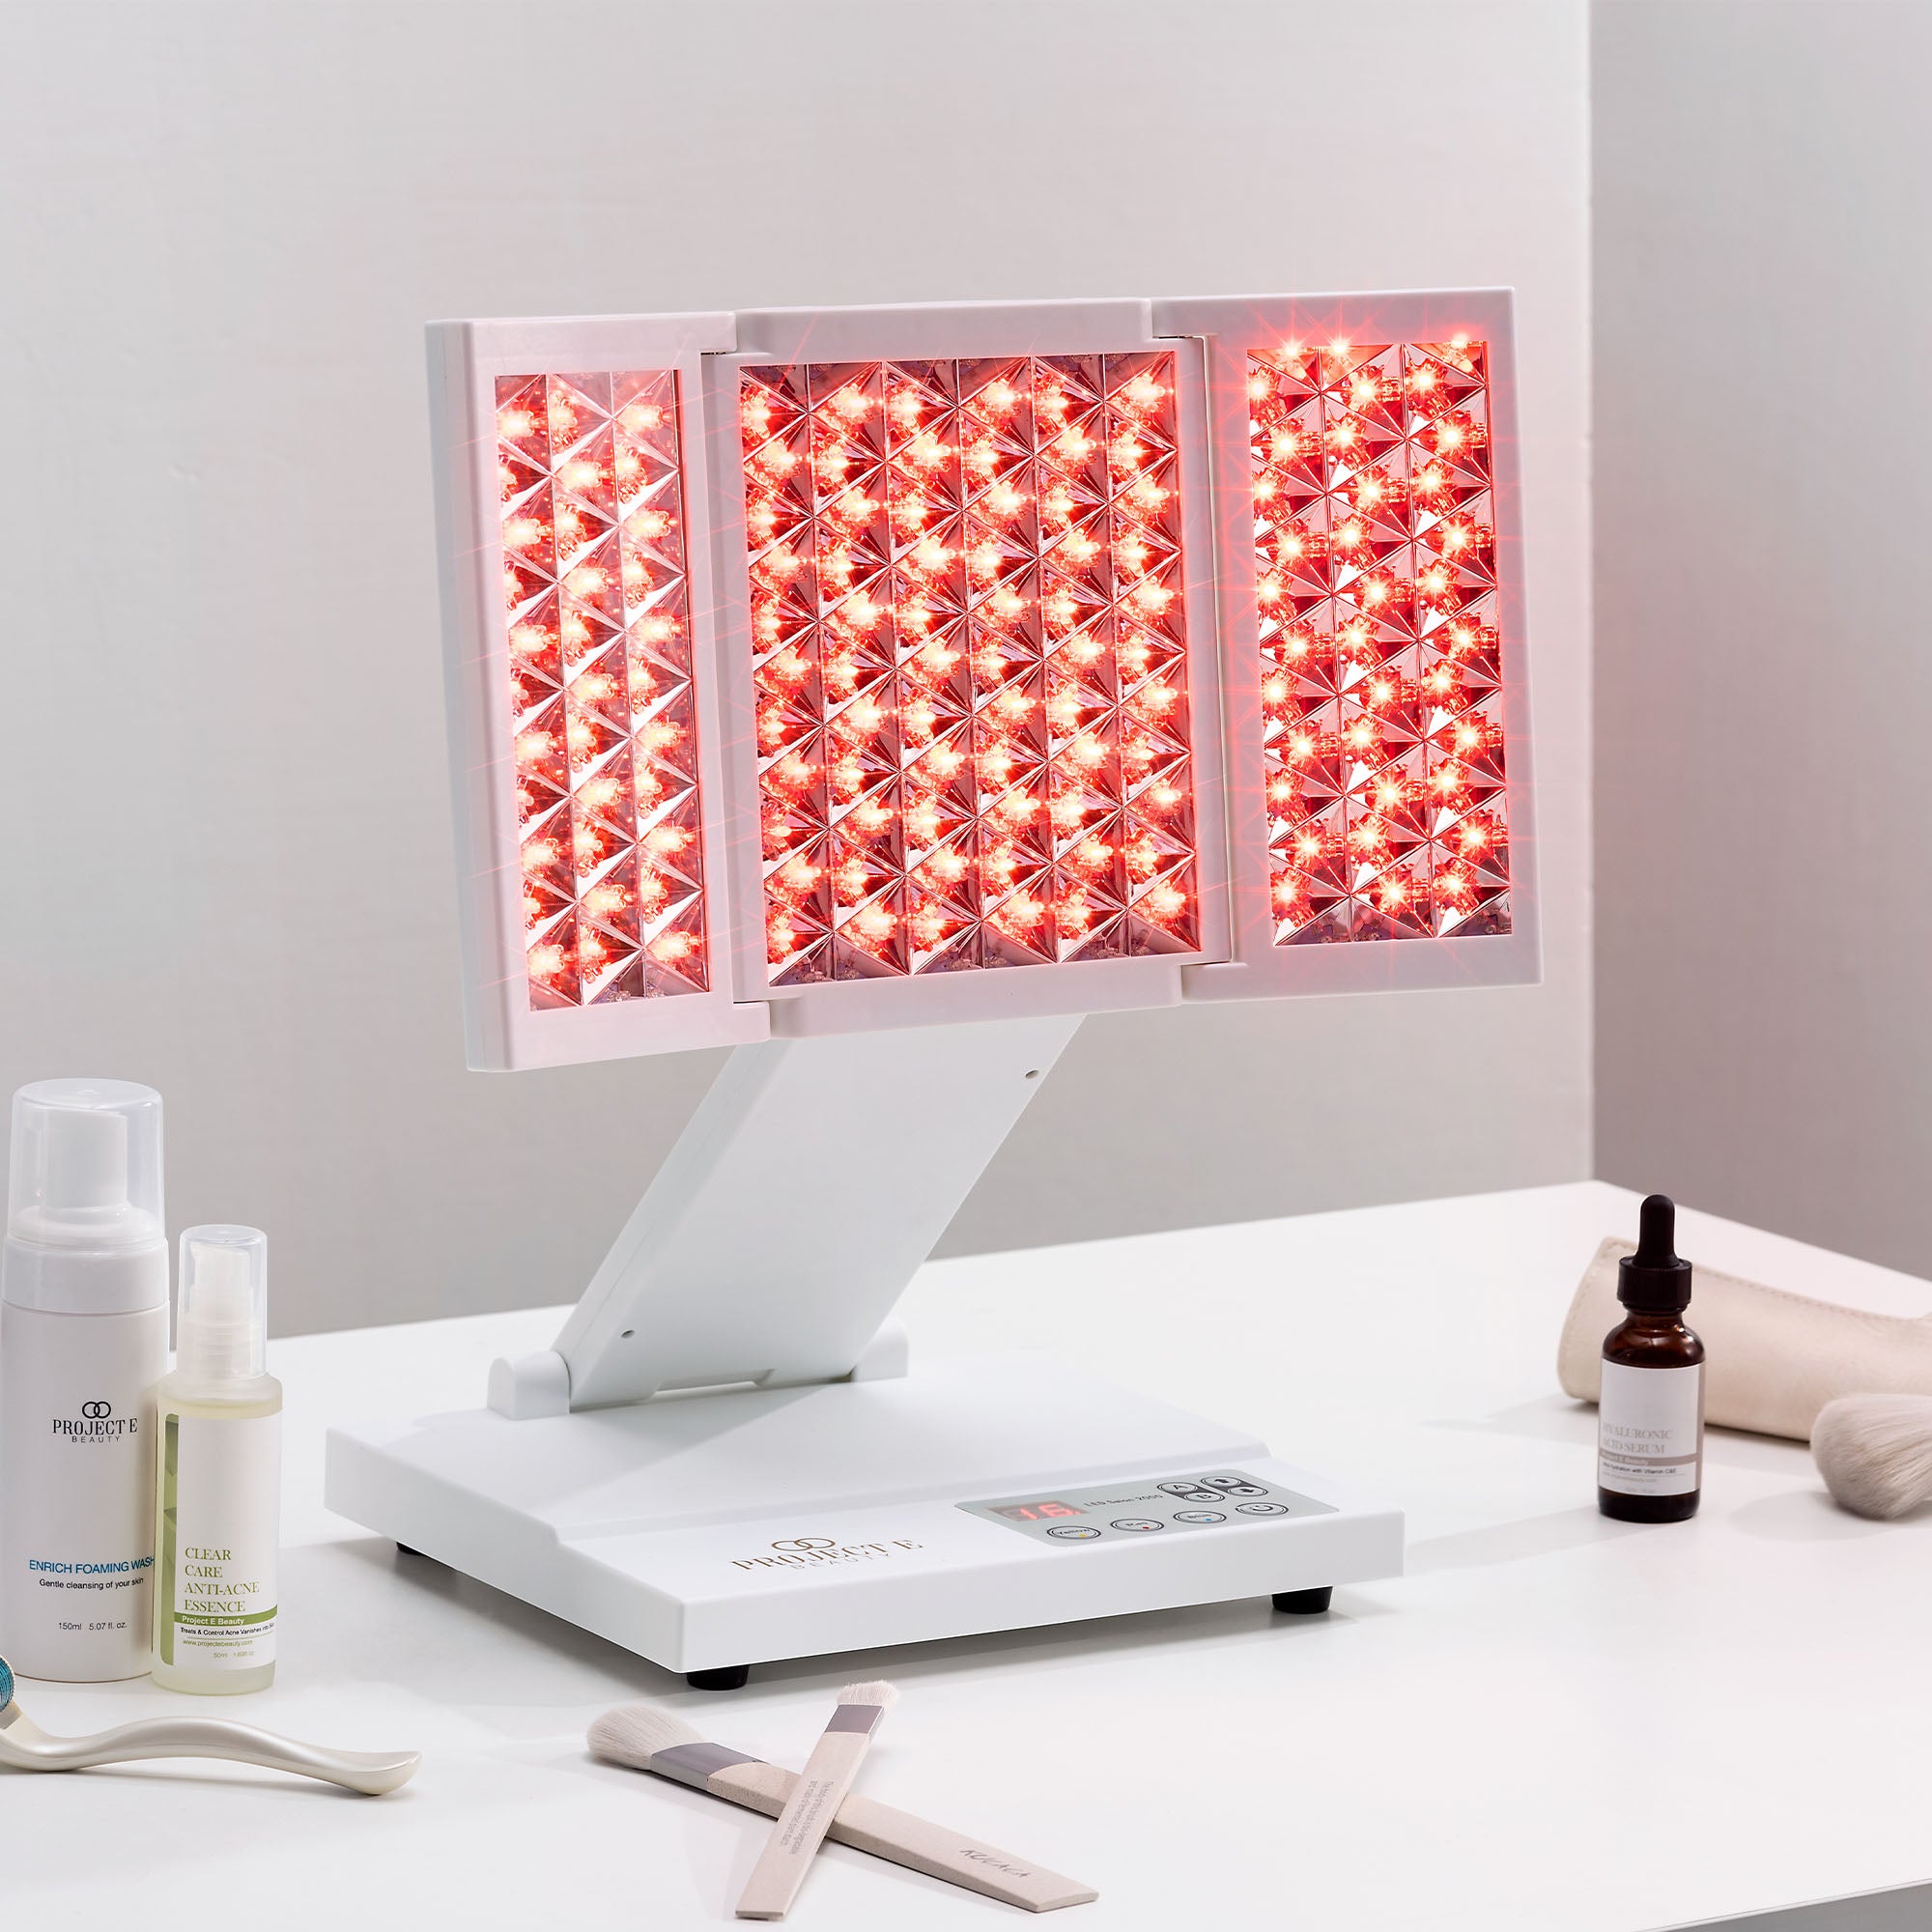 LumaPro | Tricolor LED Light Therapy Panel - Project E Beauty